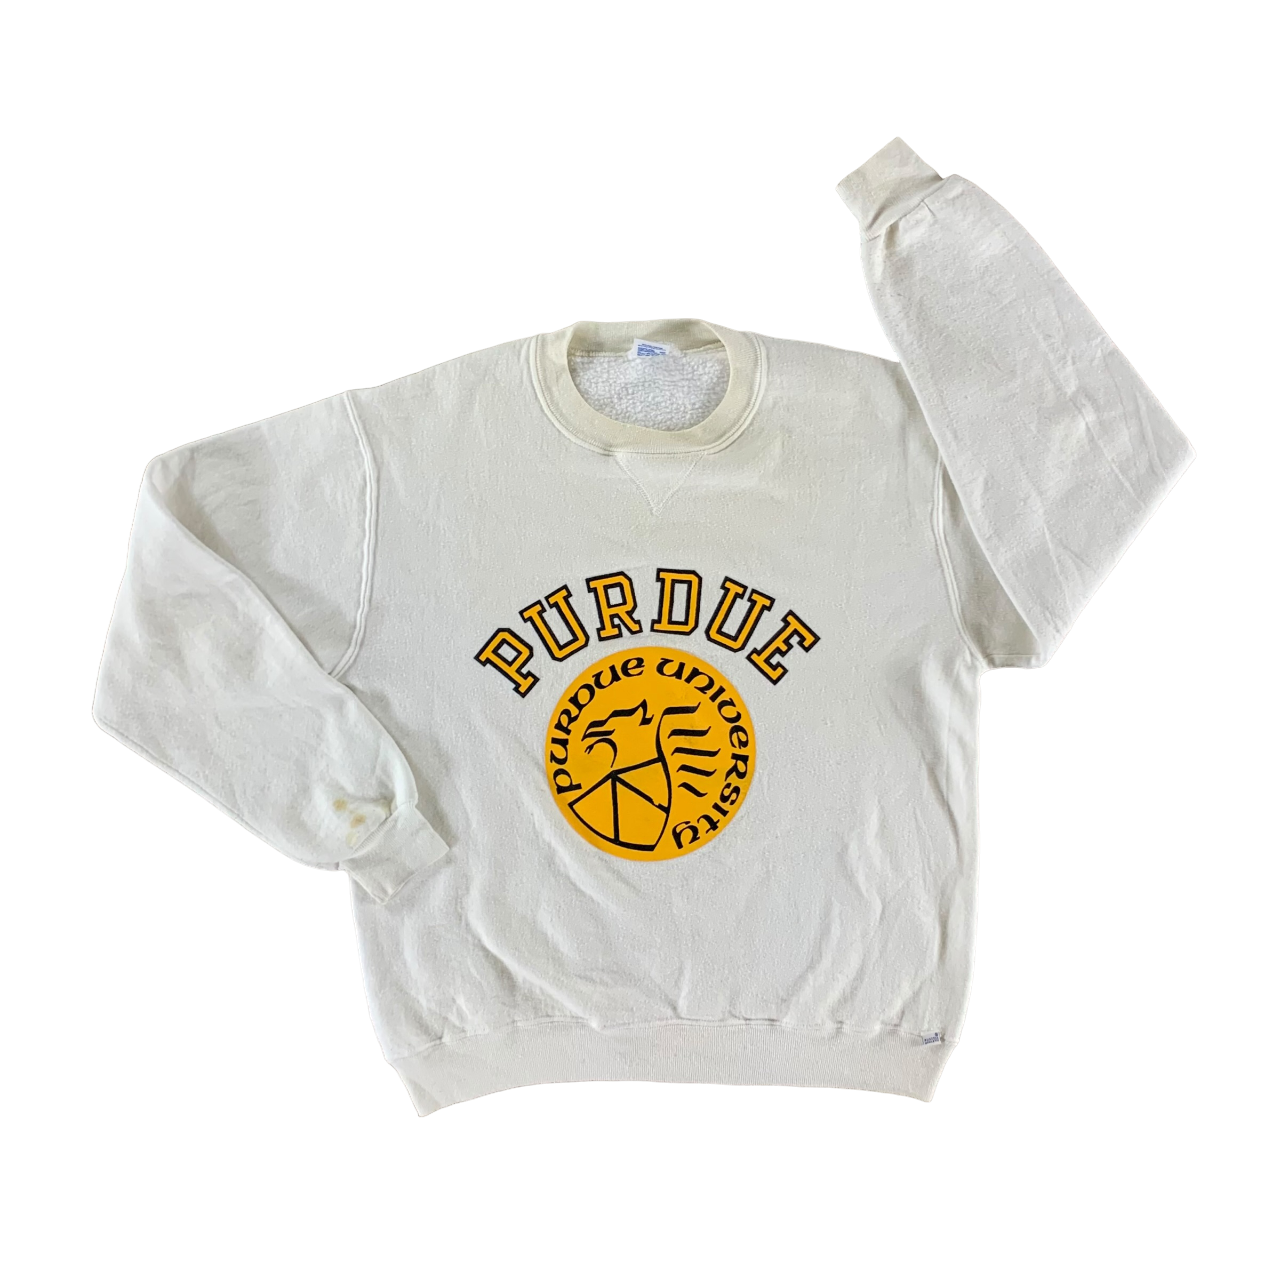 Vintage 1990s Purdue University Sweatshirt size Medium